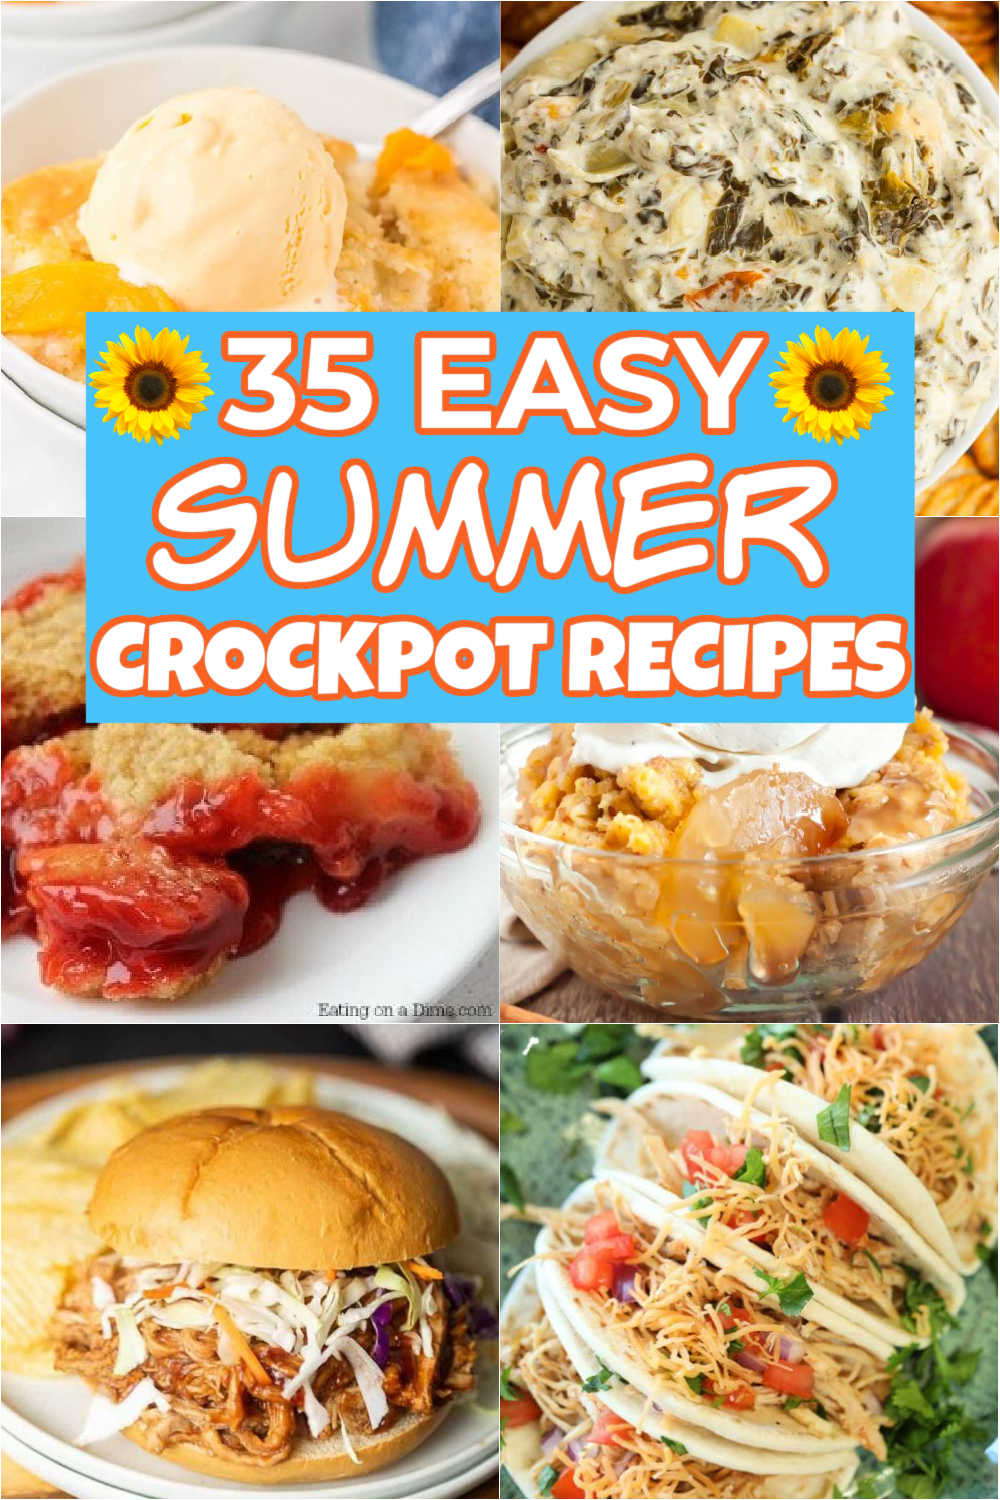 12 Light & Refreshing Summer Slow Cooker Recipes